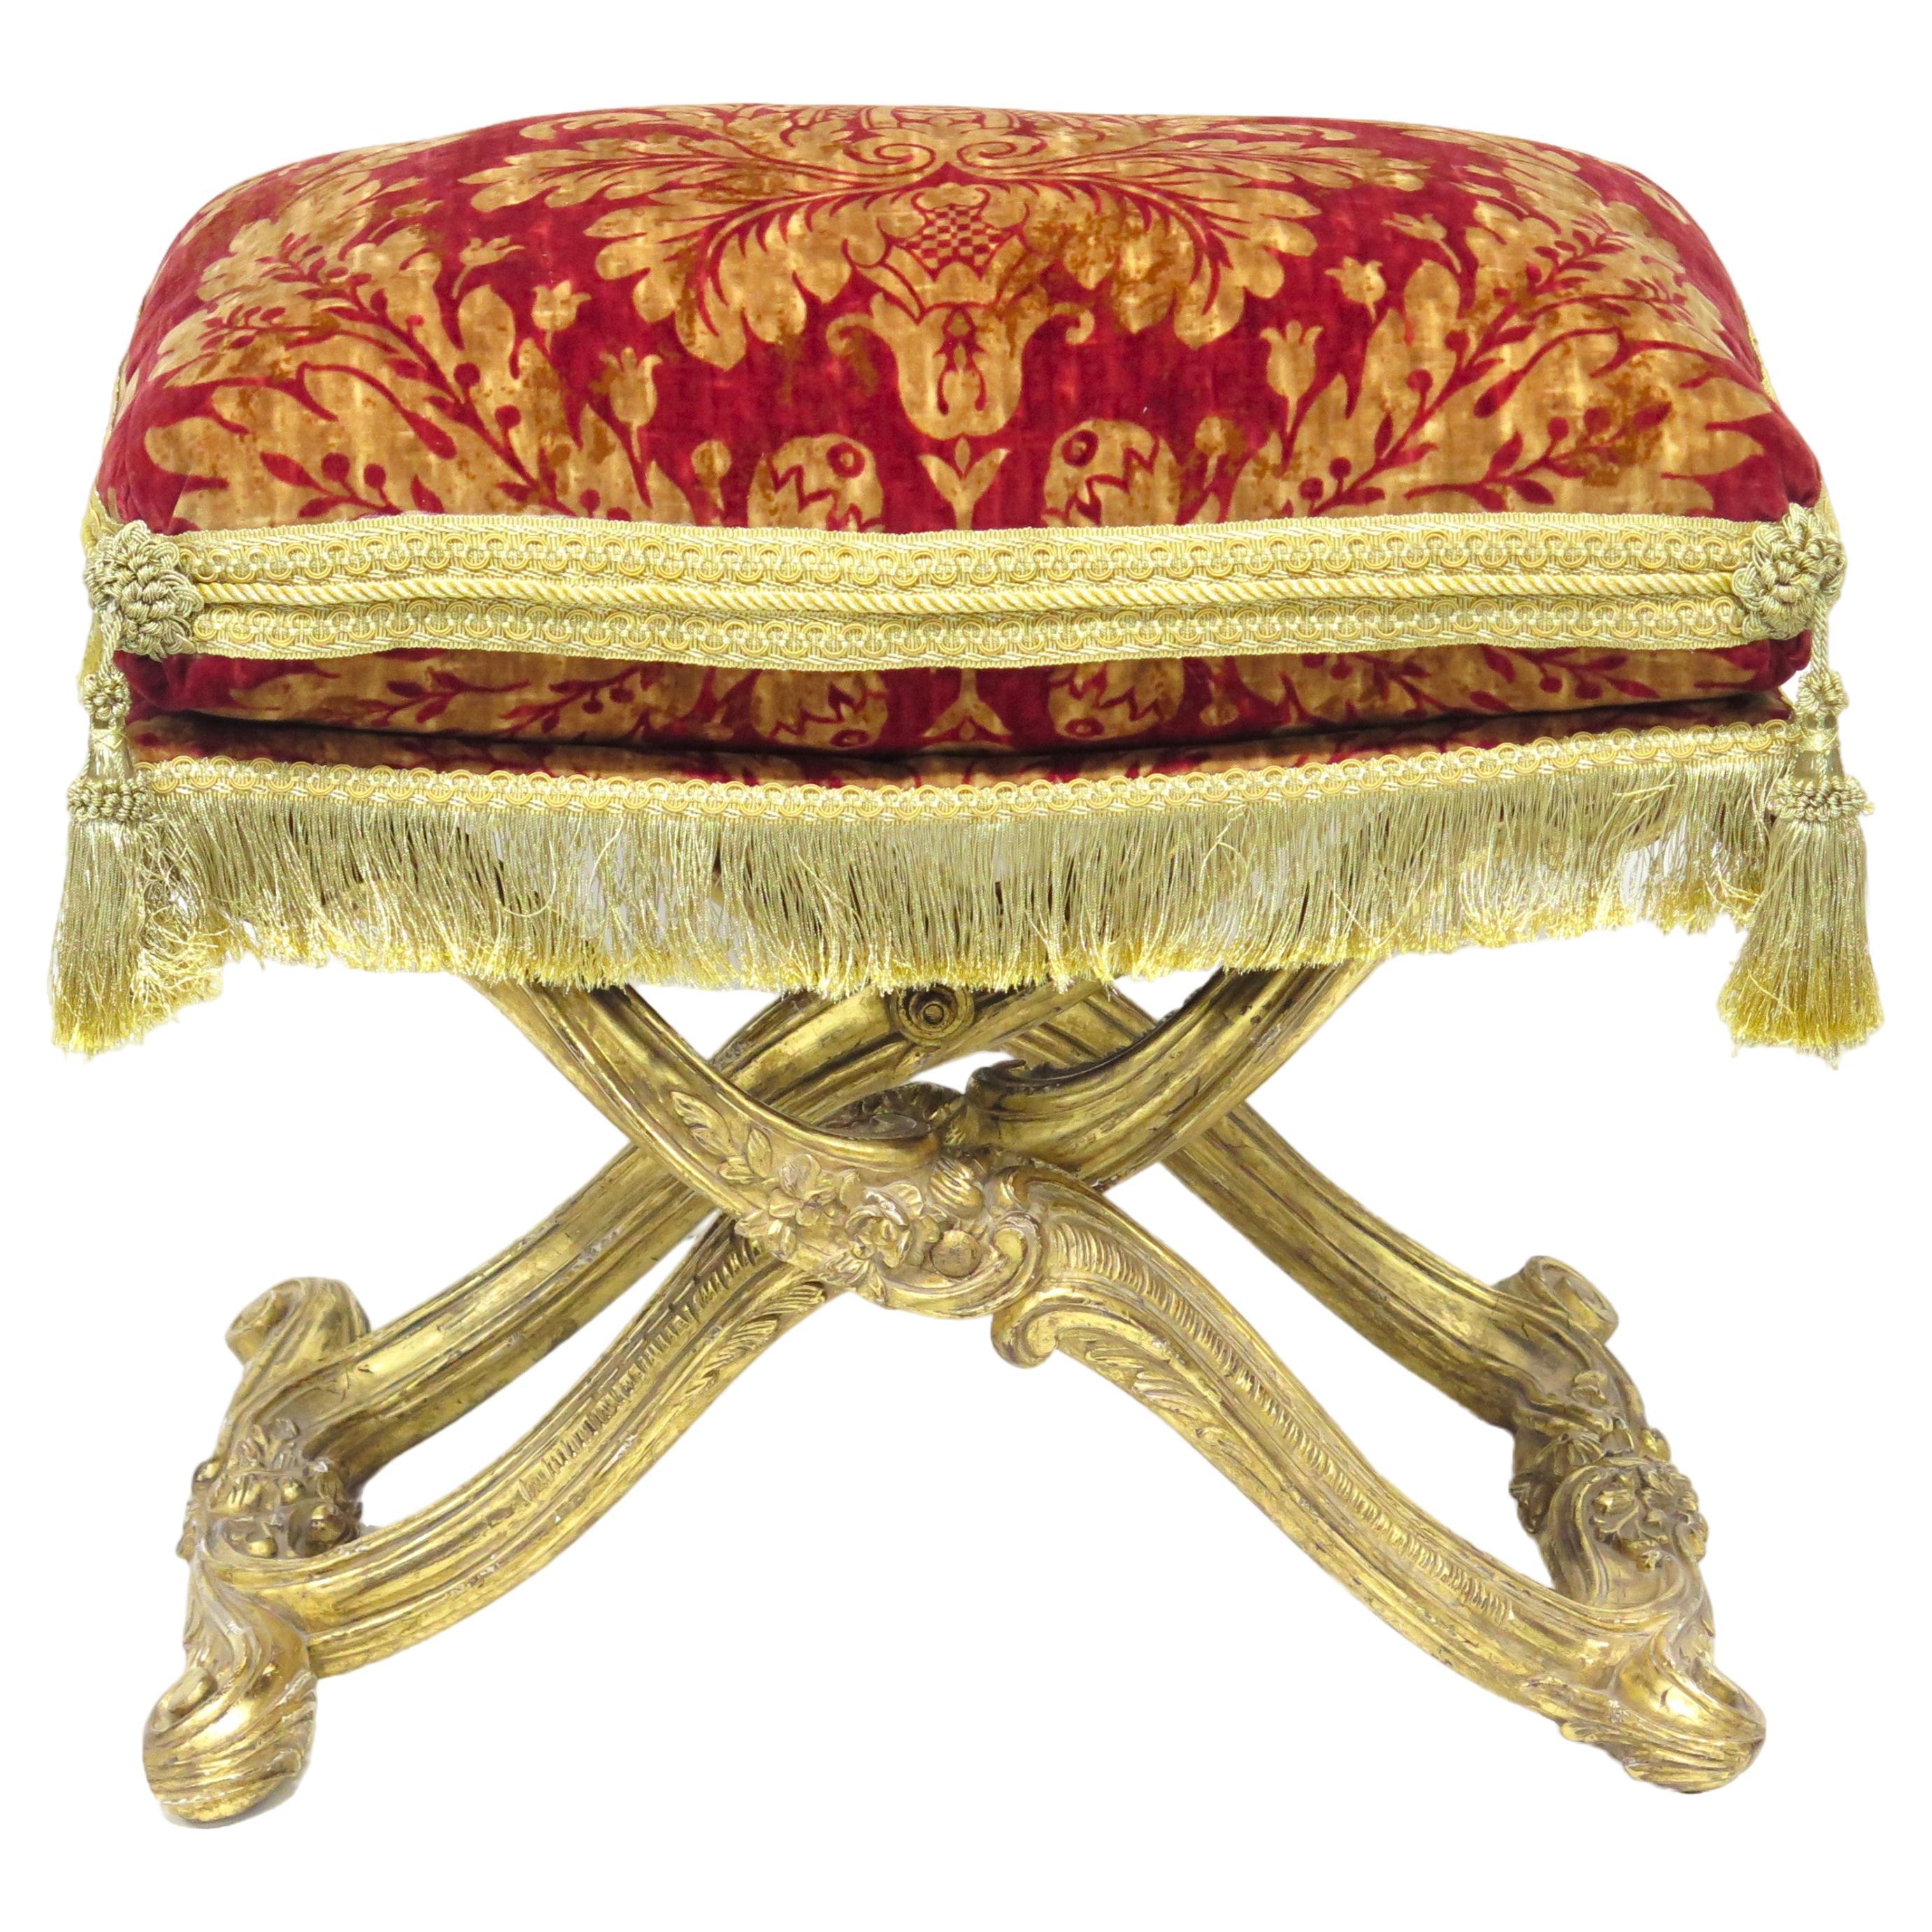 X-förmiger klappbarer Hocker / Curule-Sitz aus vergoldetem Holz im Louis XV.-Stil im Angebot